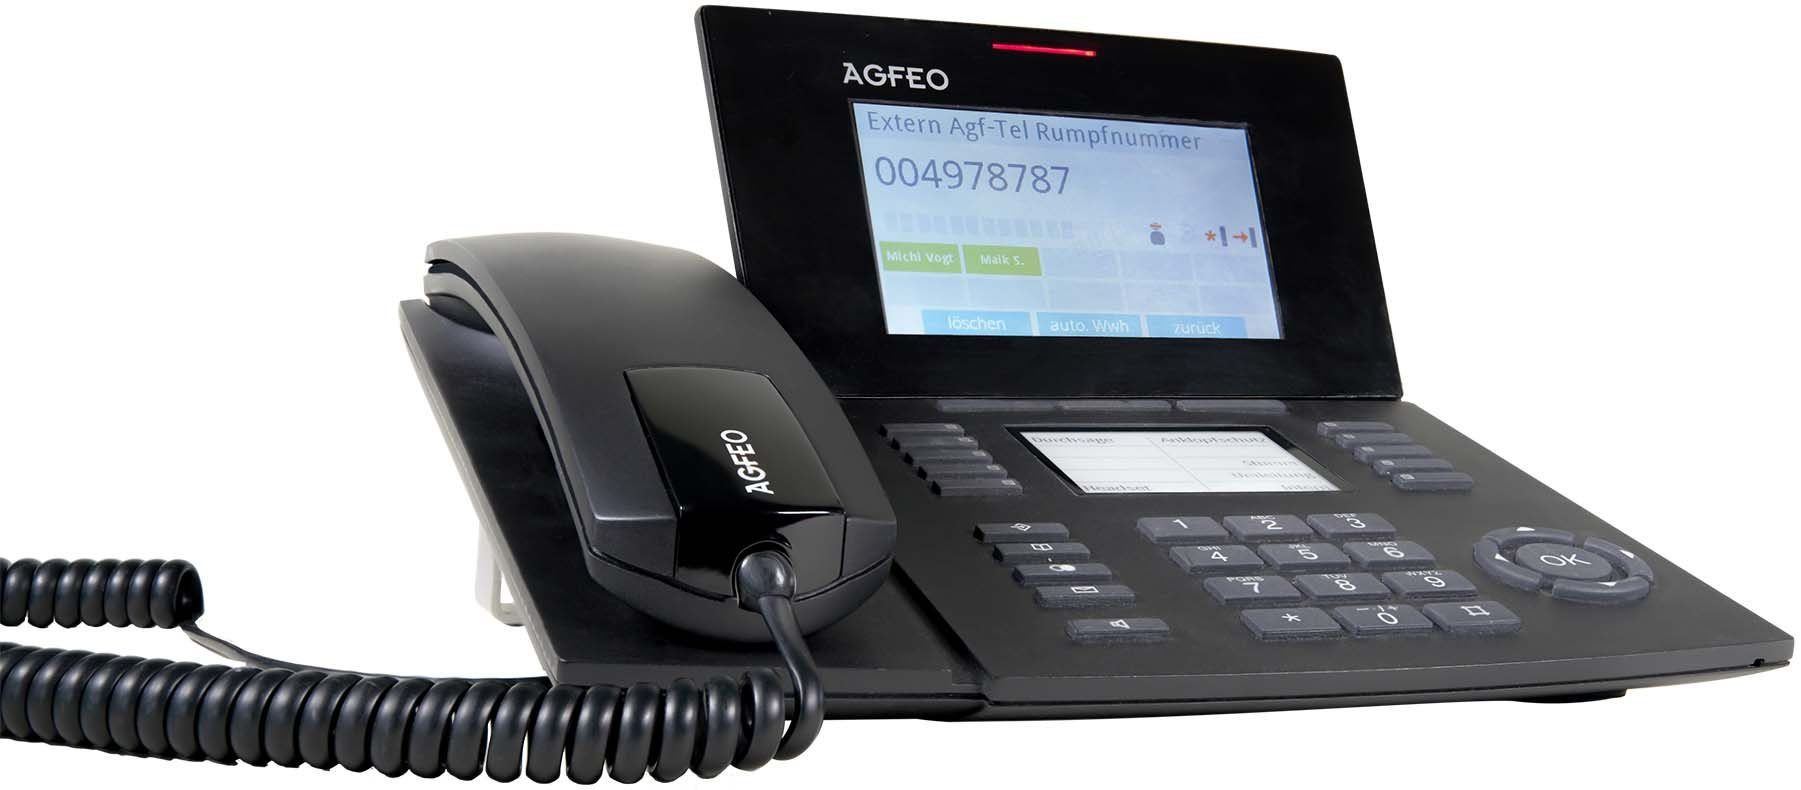 Agfeo AGFEO Systemtelefon ST56 SENSORfon Festnetztelefon schwarz